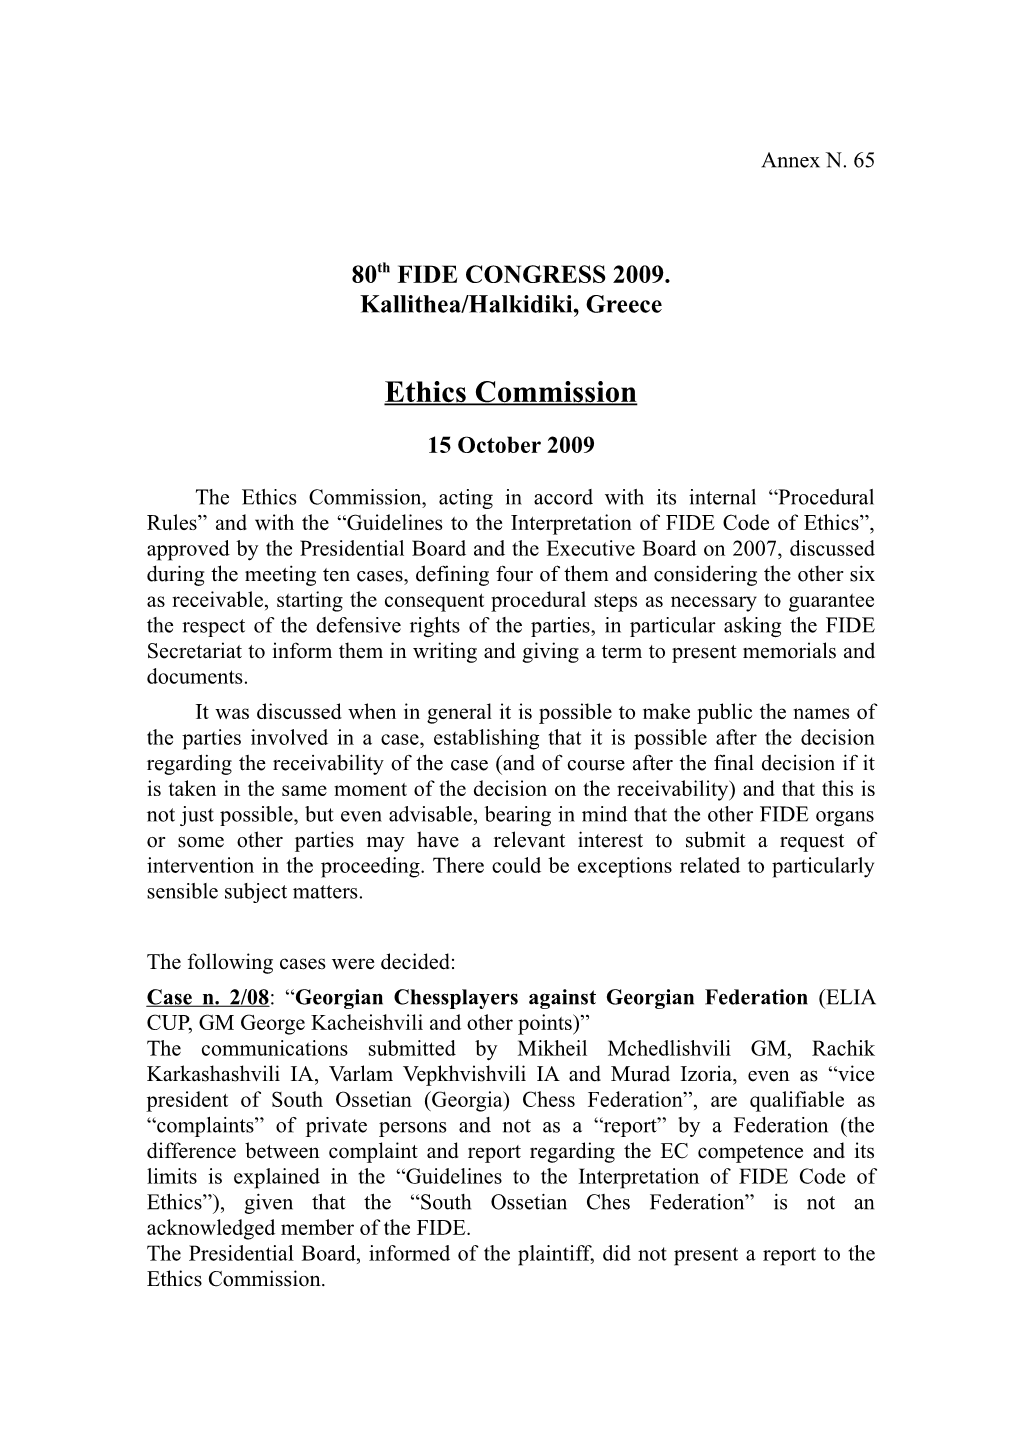 Ethics Commission